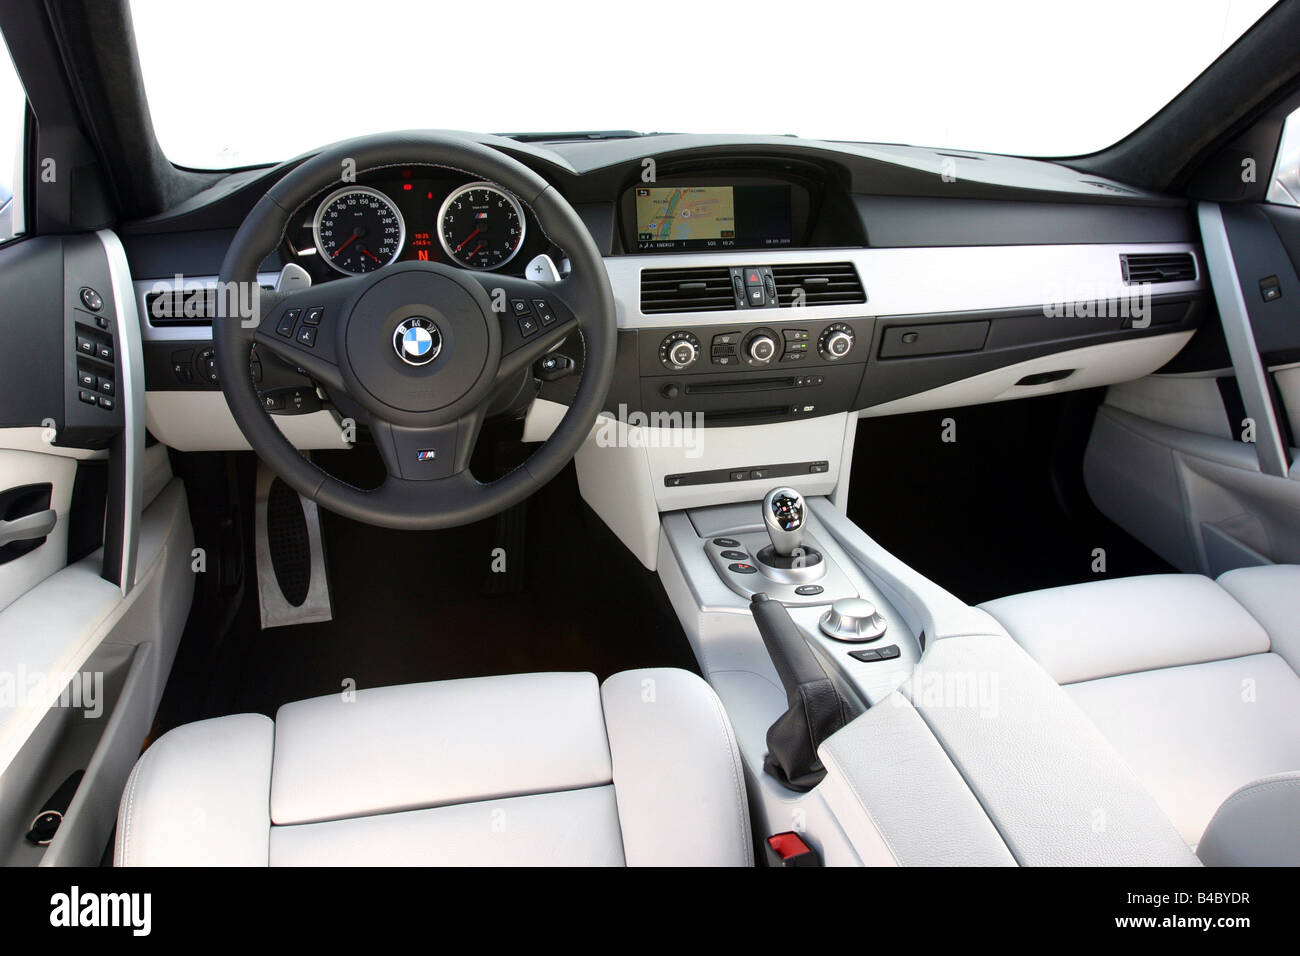 File:BMW E60 M5 Interior.JPG - Wikimedia Commons